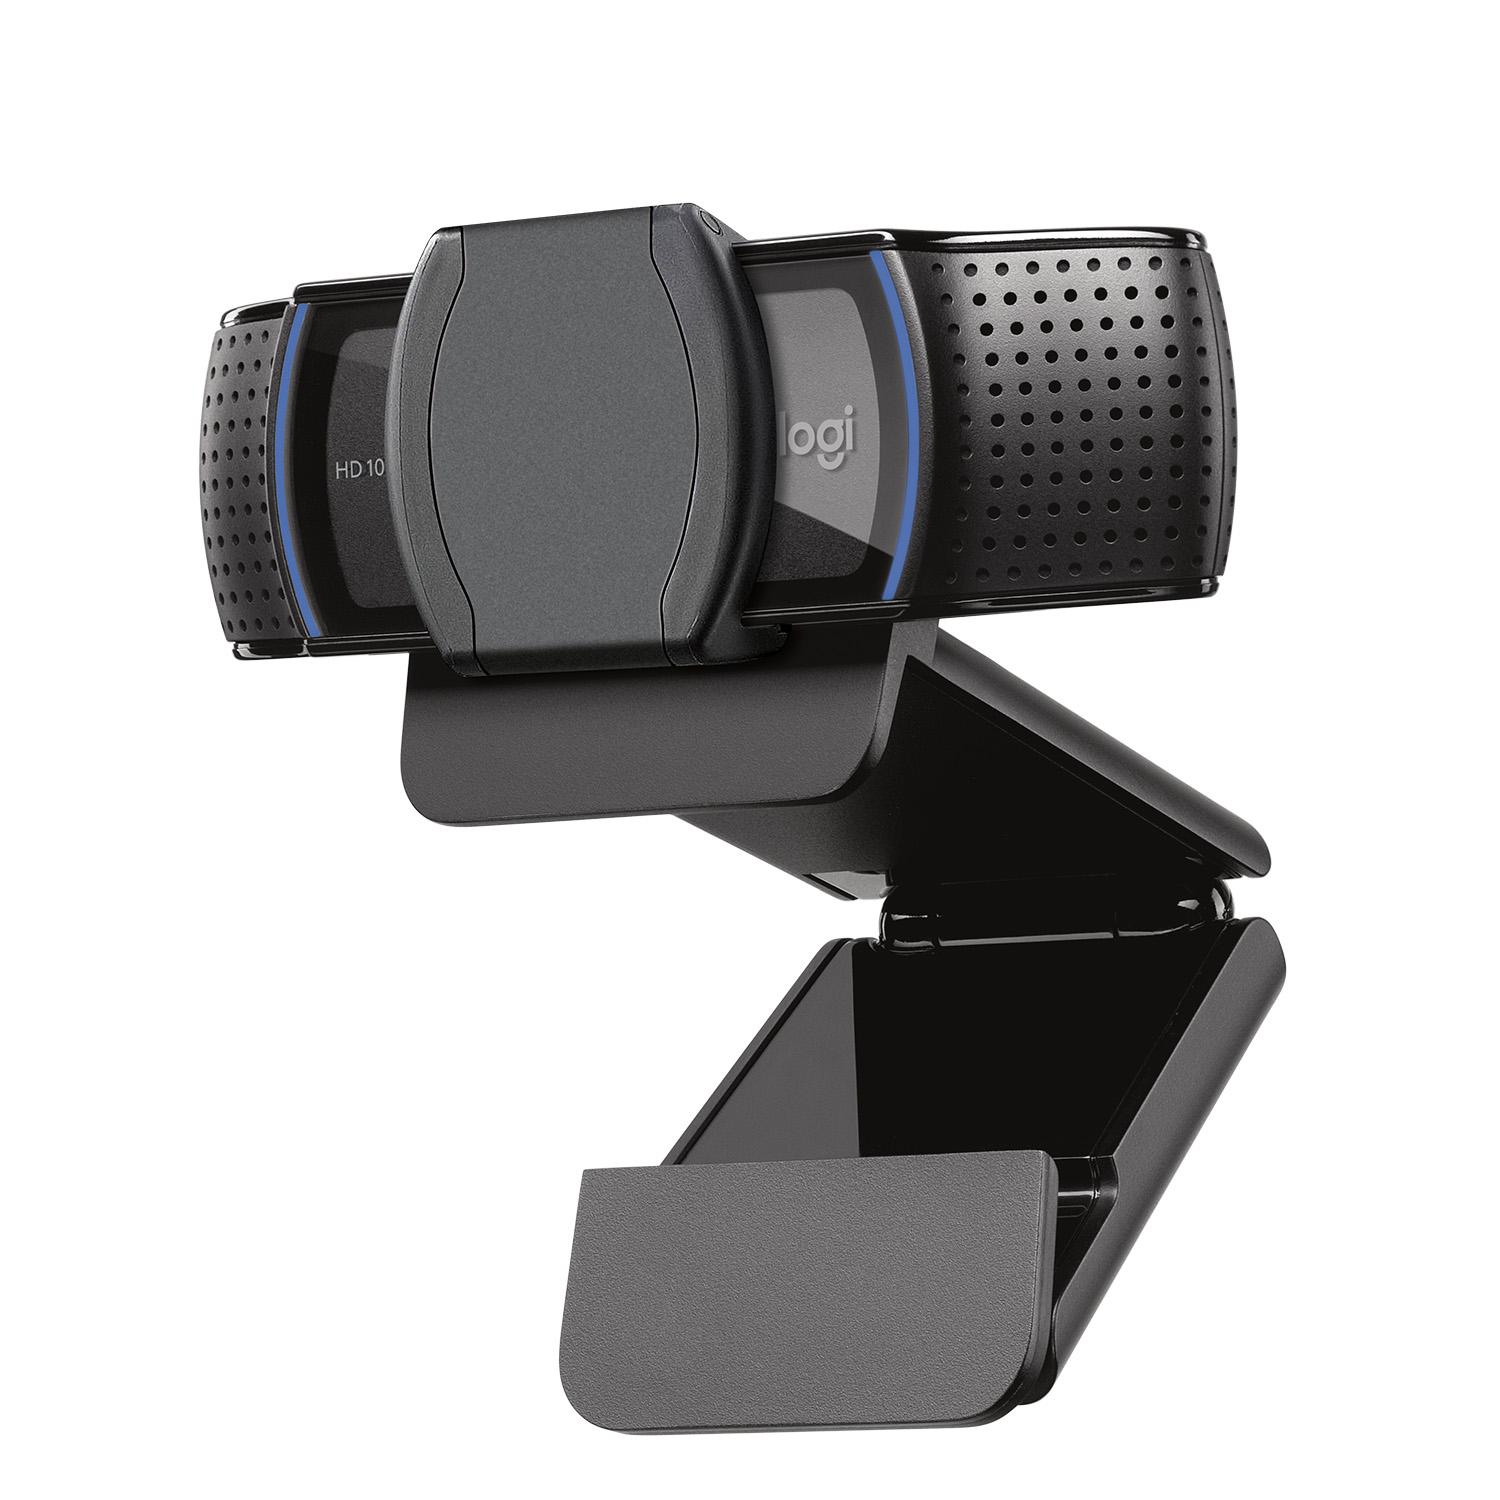 Selected image for Logitech C920s Full HD Pro web kamera sa zaštitnim poklopcem Crna